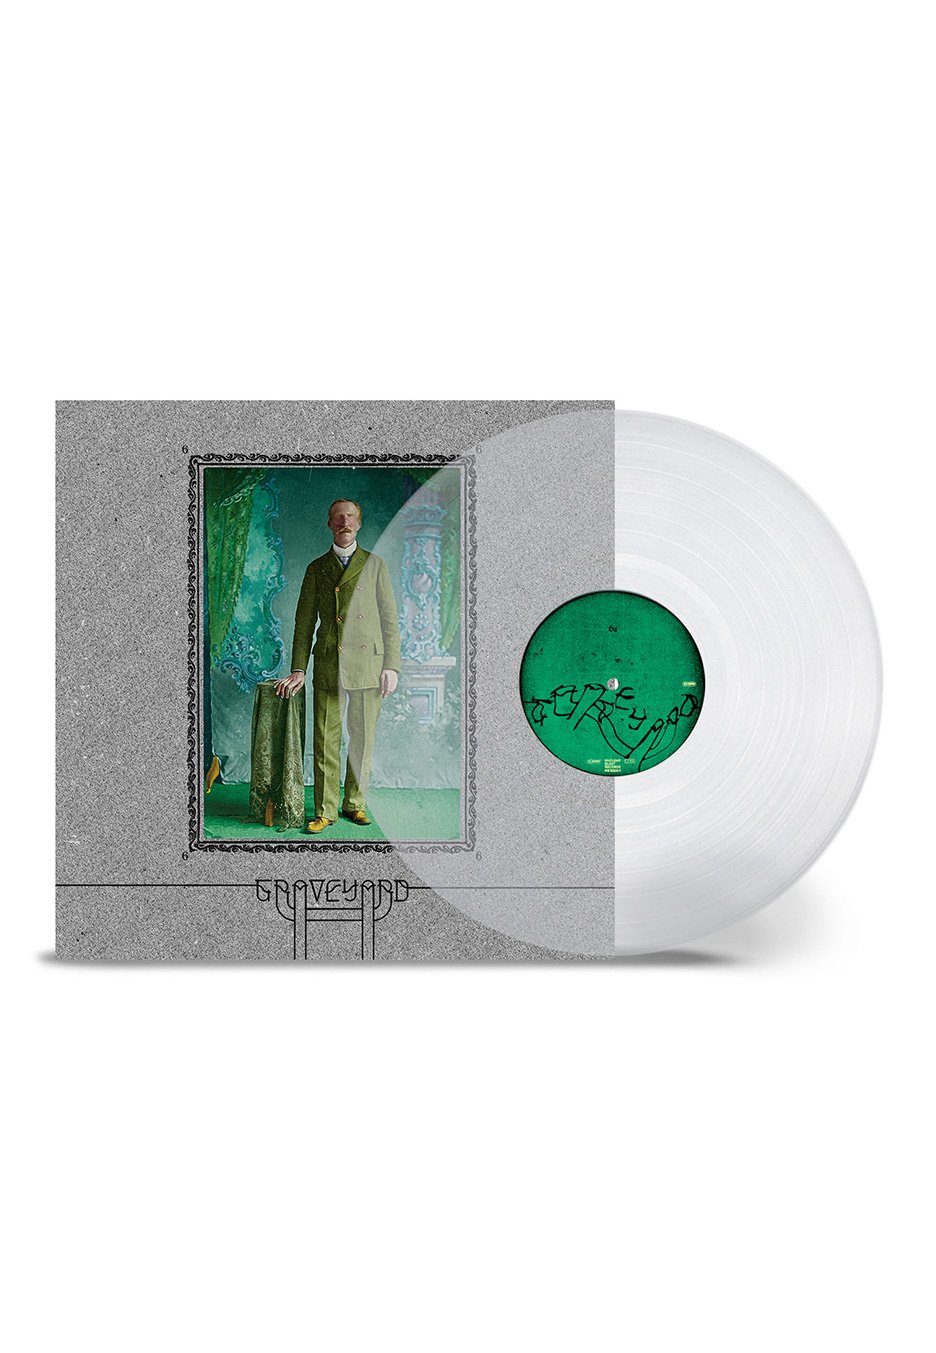 Graveyard - 6 Ltd. Clear - Colored Vinyl